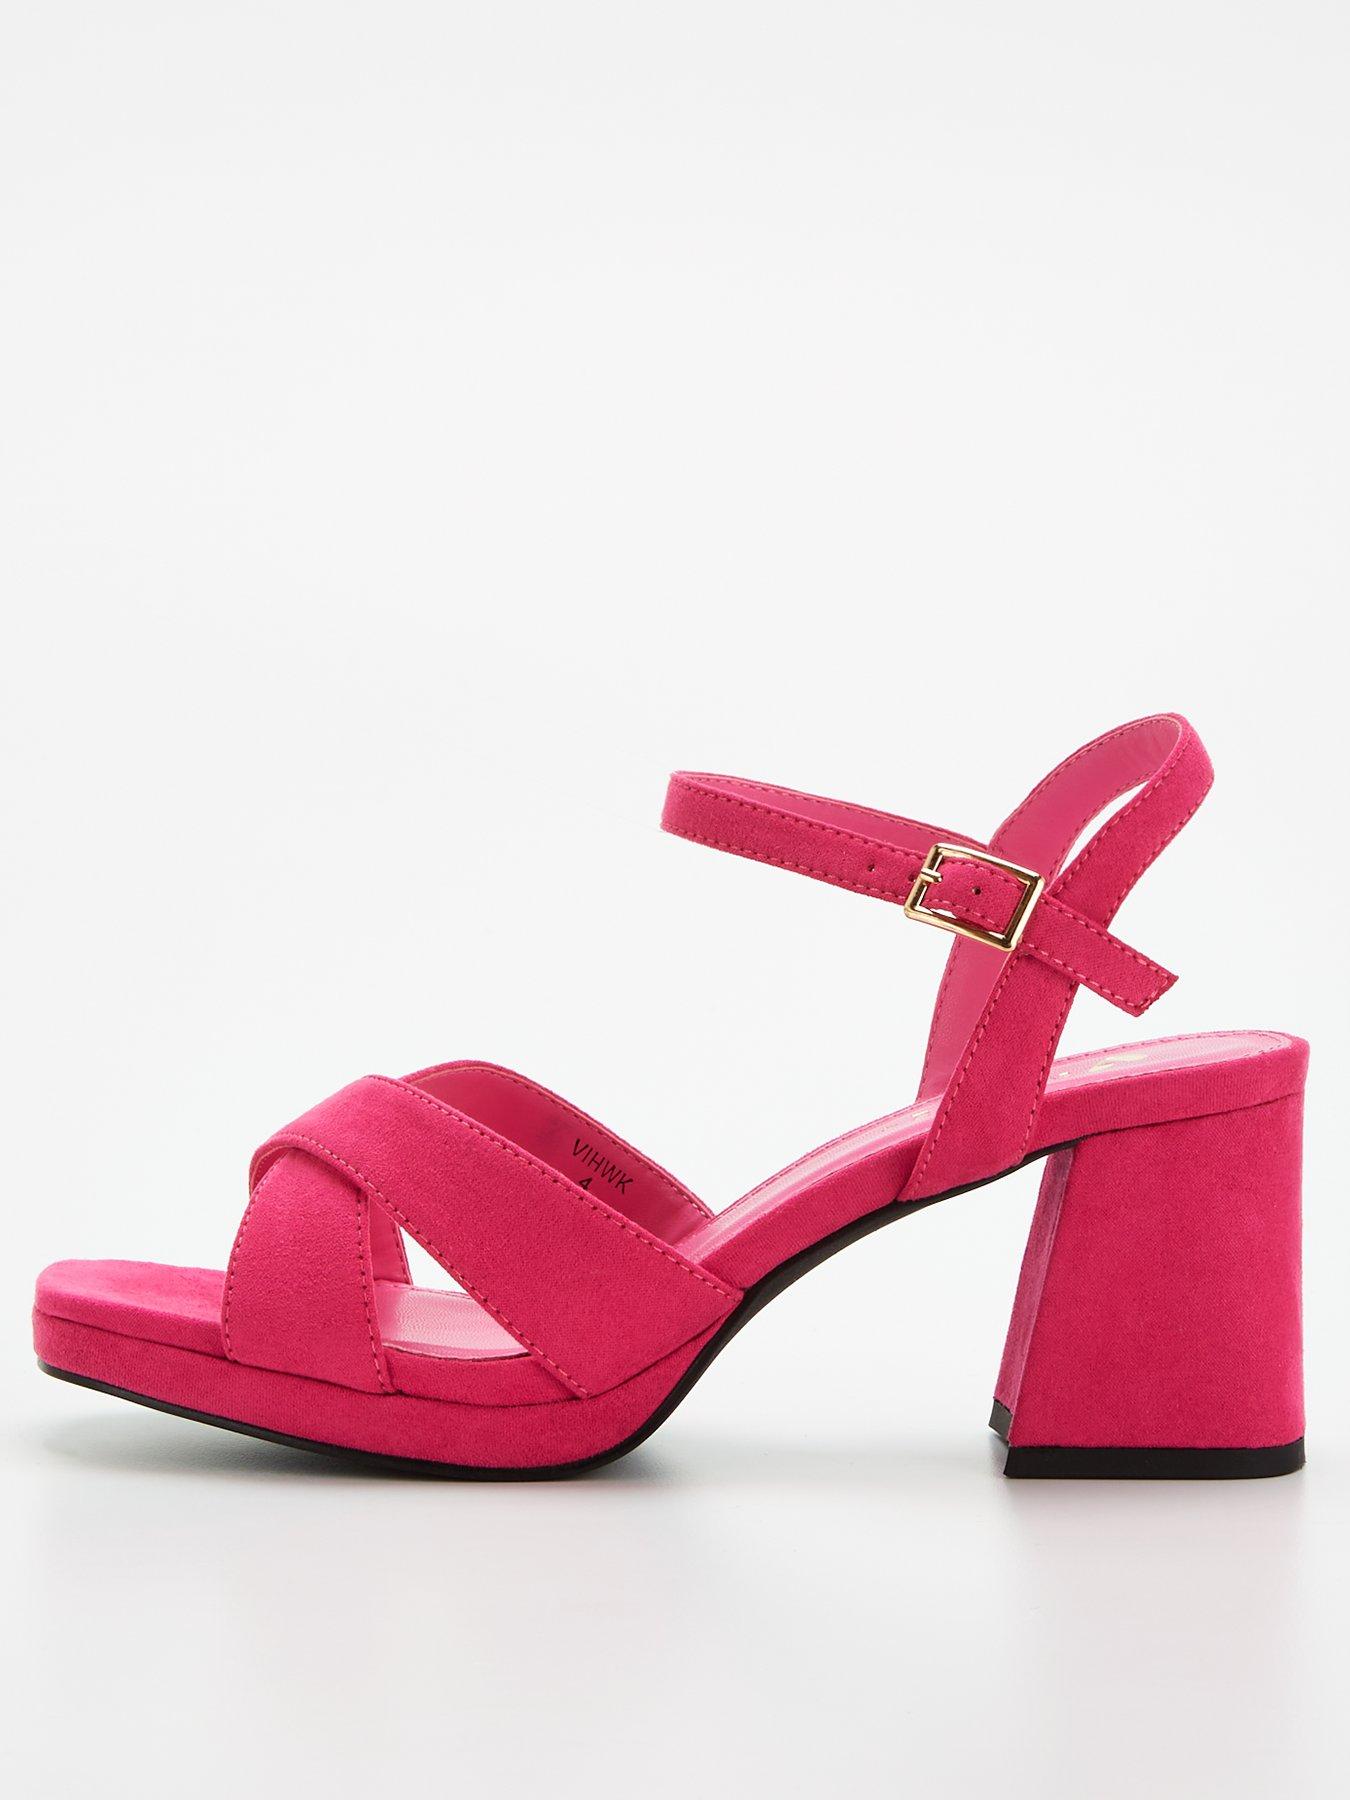 Back On Top Heels - Neon Pink | Fashion Nova, Shoes | Fashion Nova